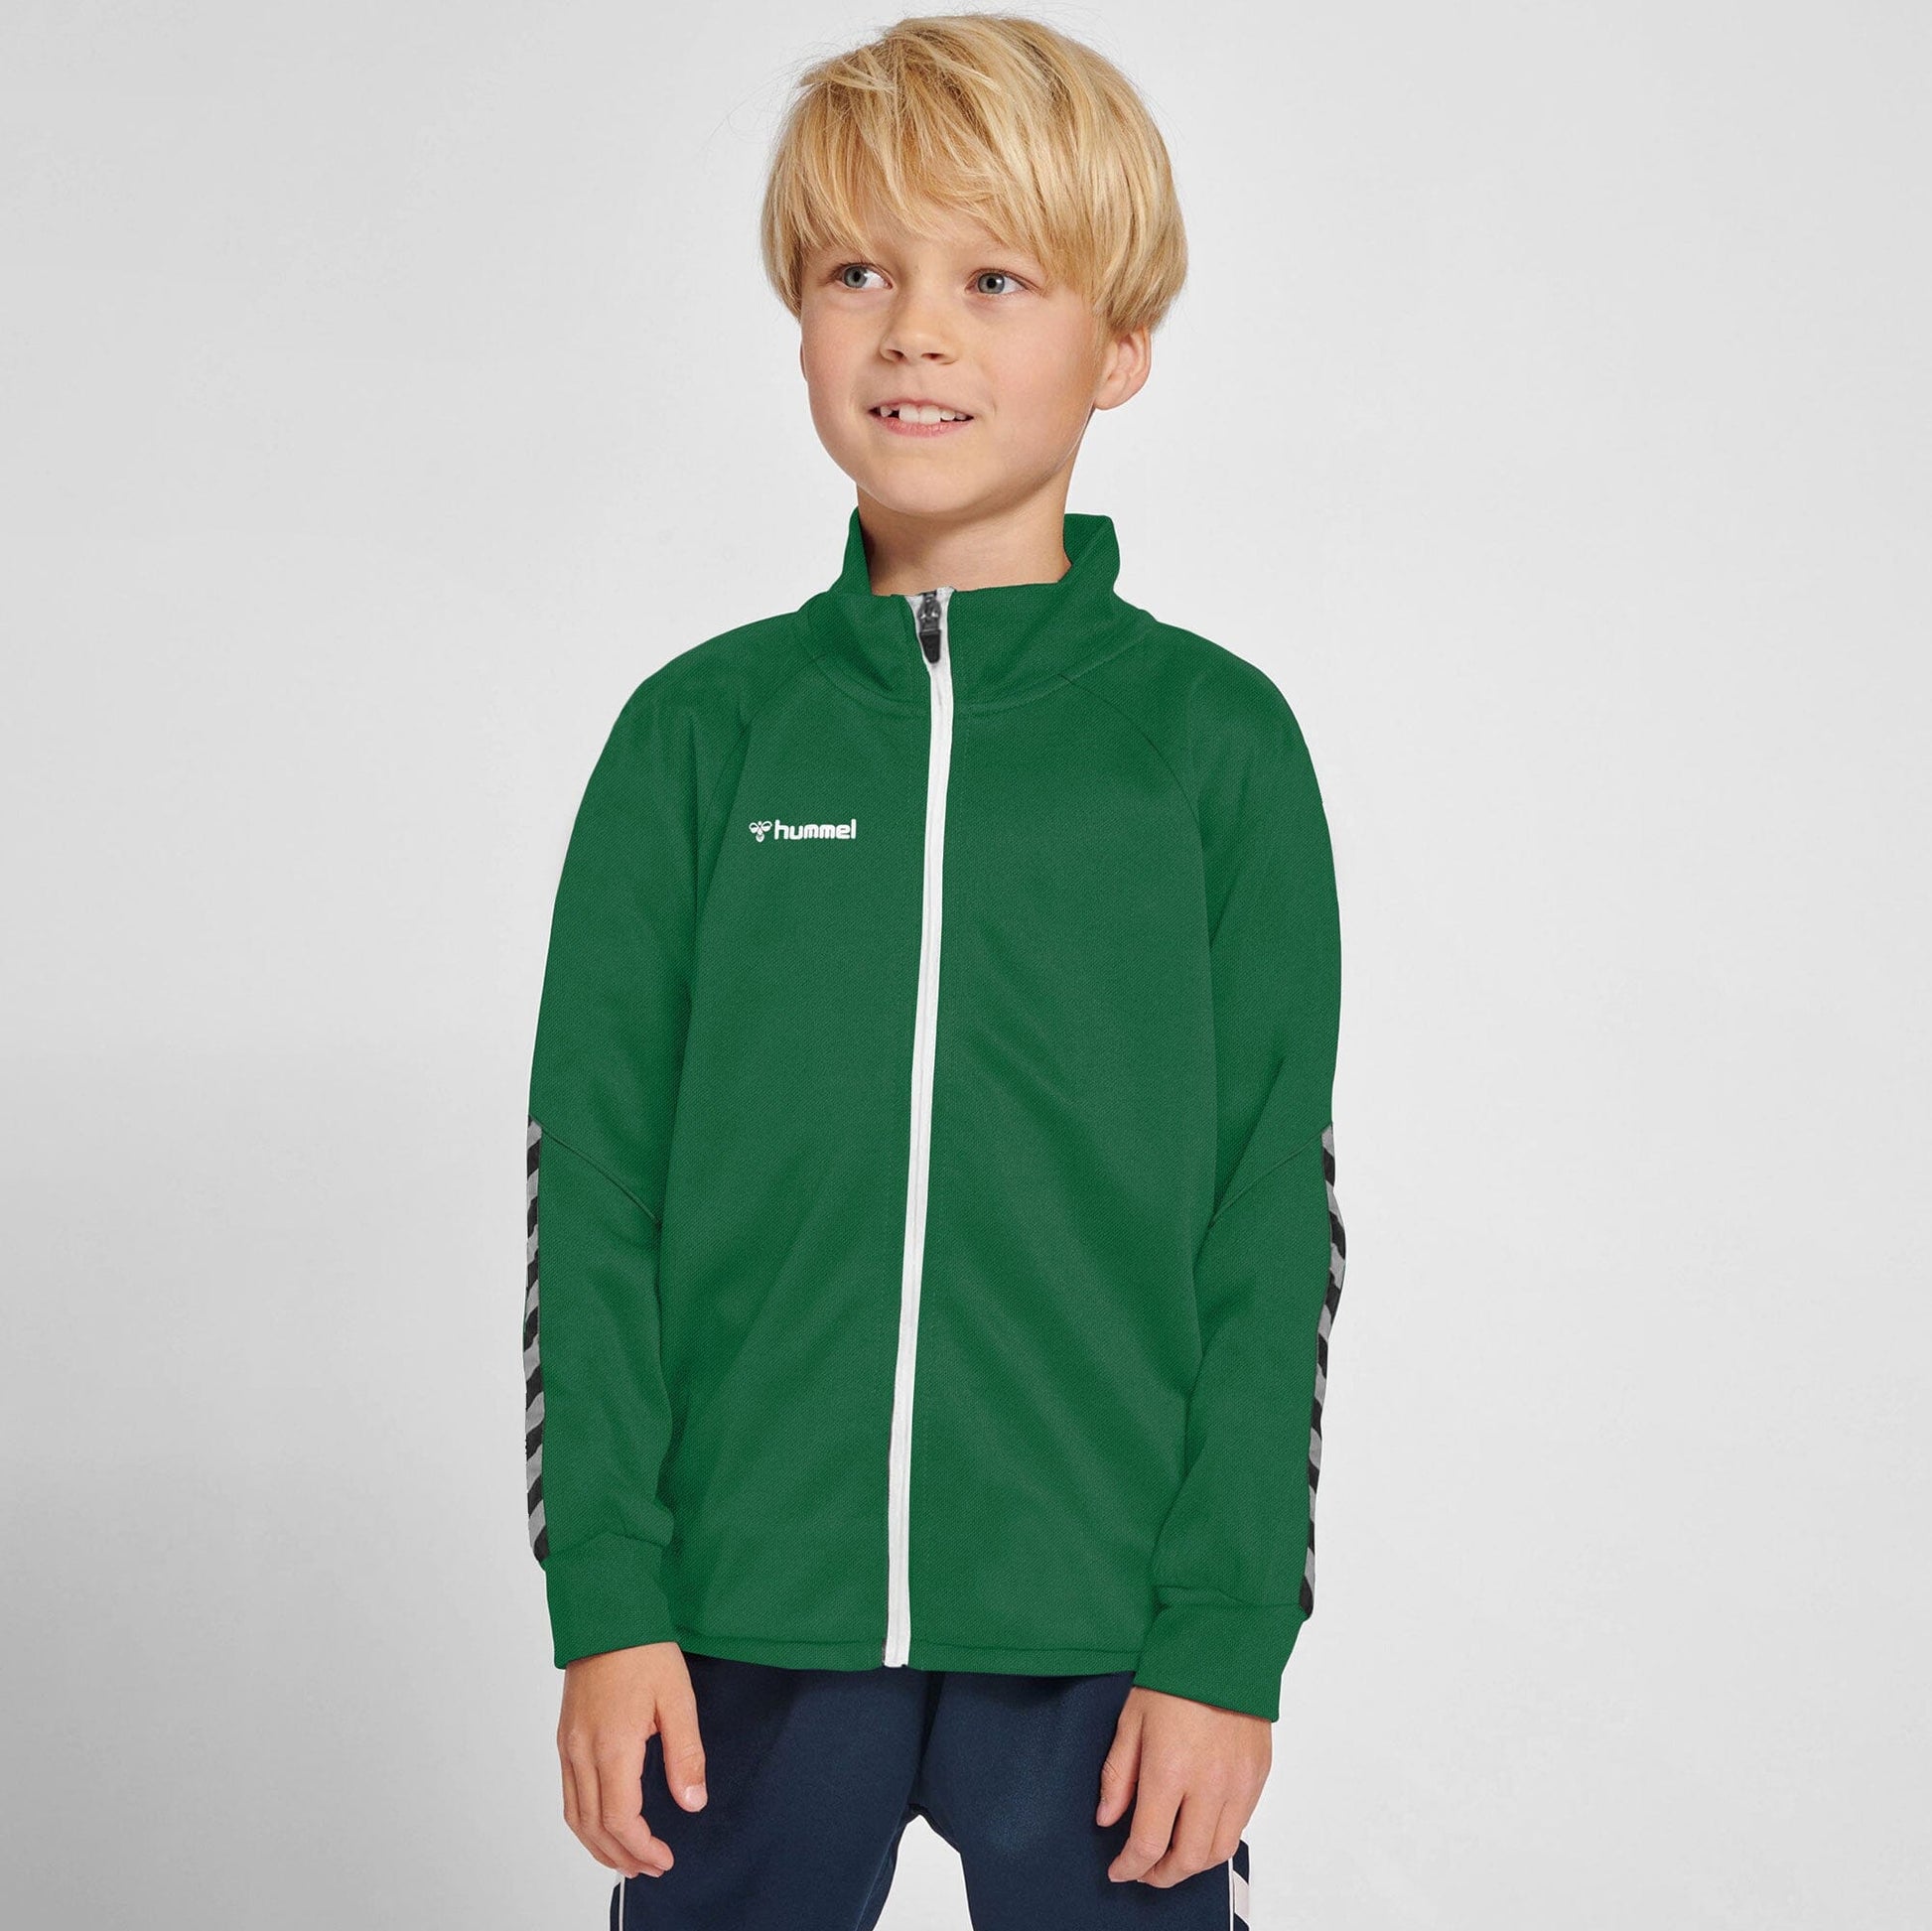 Hummel Boy's Foreman Arrow Printed Sports Zipper Jacket Boy's Jacket HAS Apparel Green 4 Years 